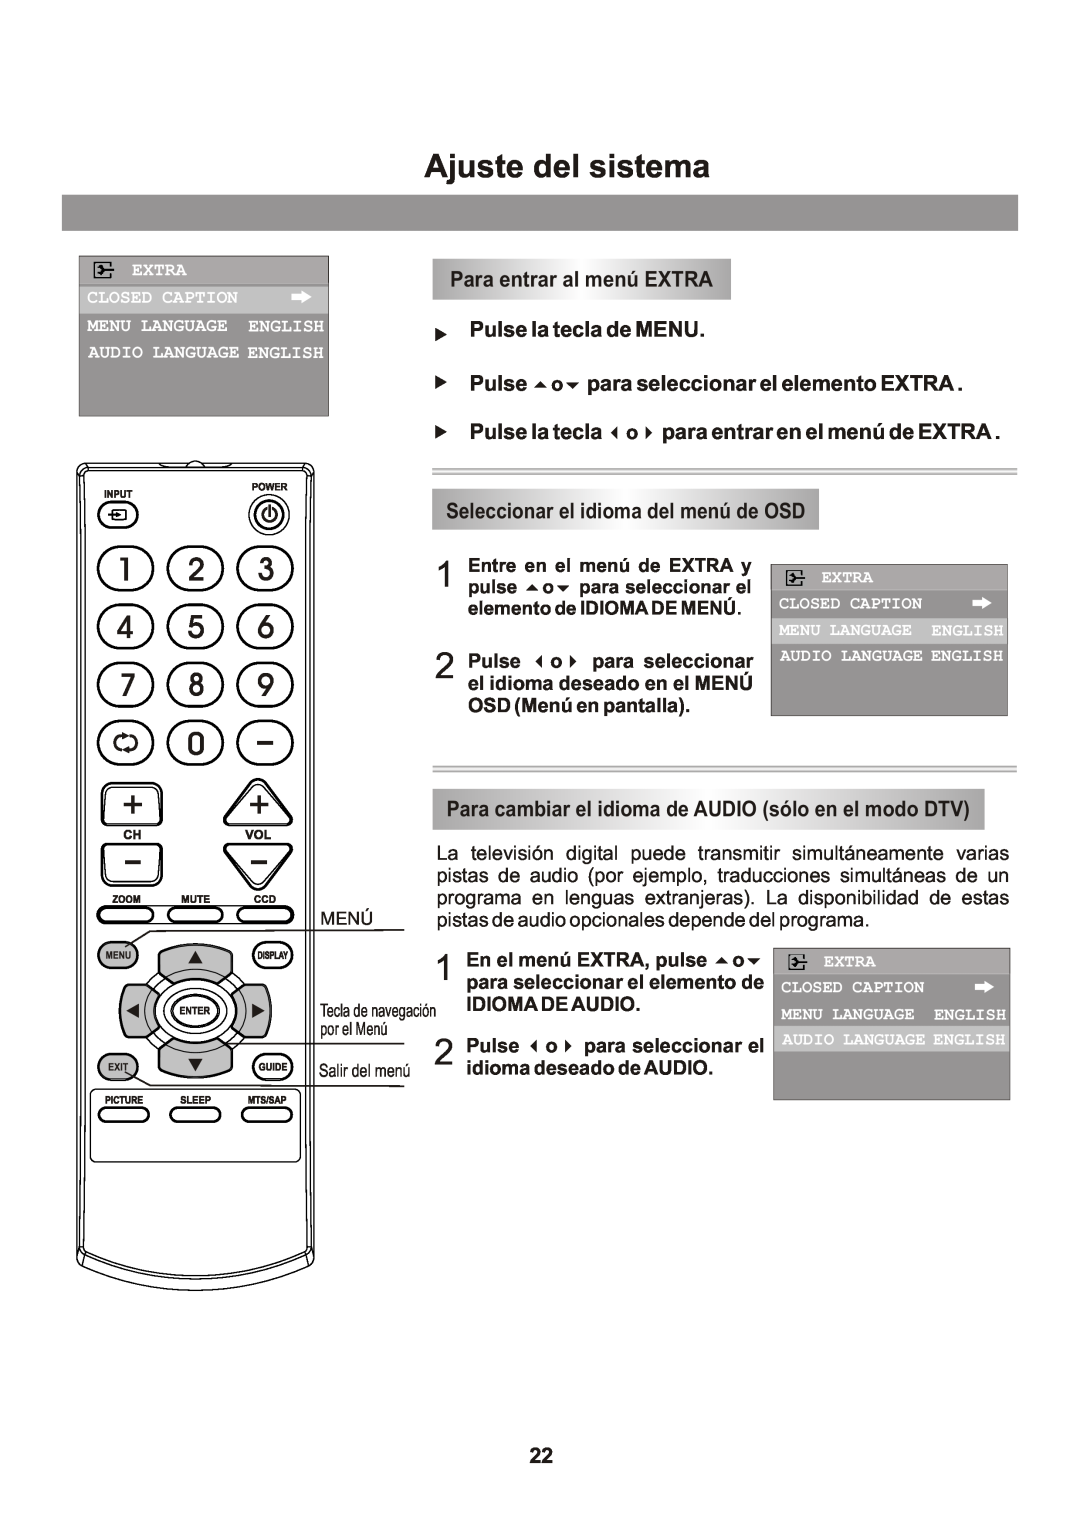 Memorex Flat Screen Tv manual Ajuste del sistema, Para entrar al menú EXTRA Pulse la tecla de MENU, Extra, Closed Caption 